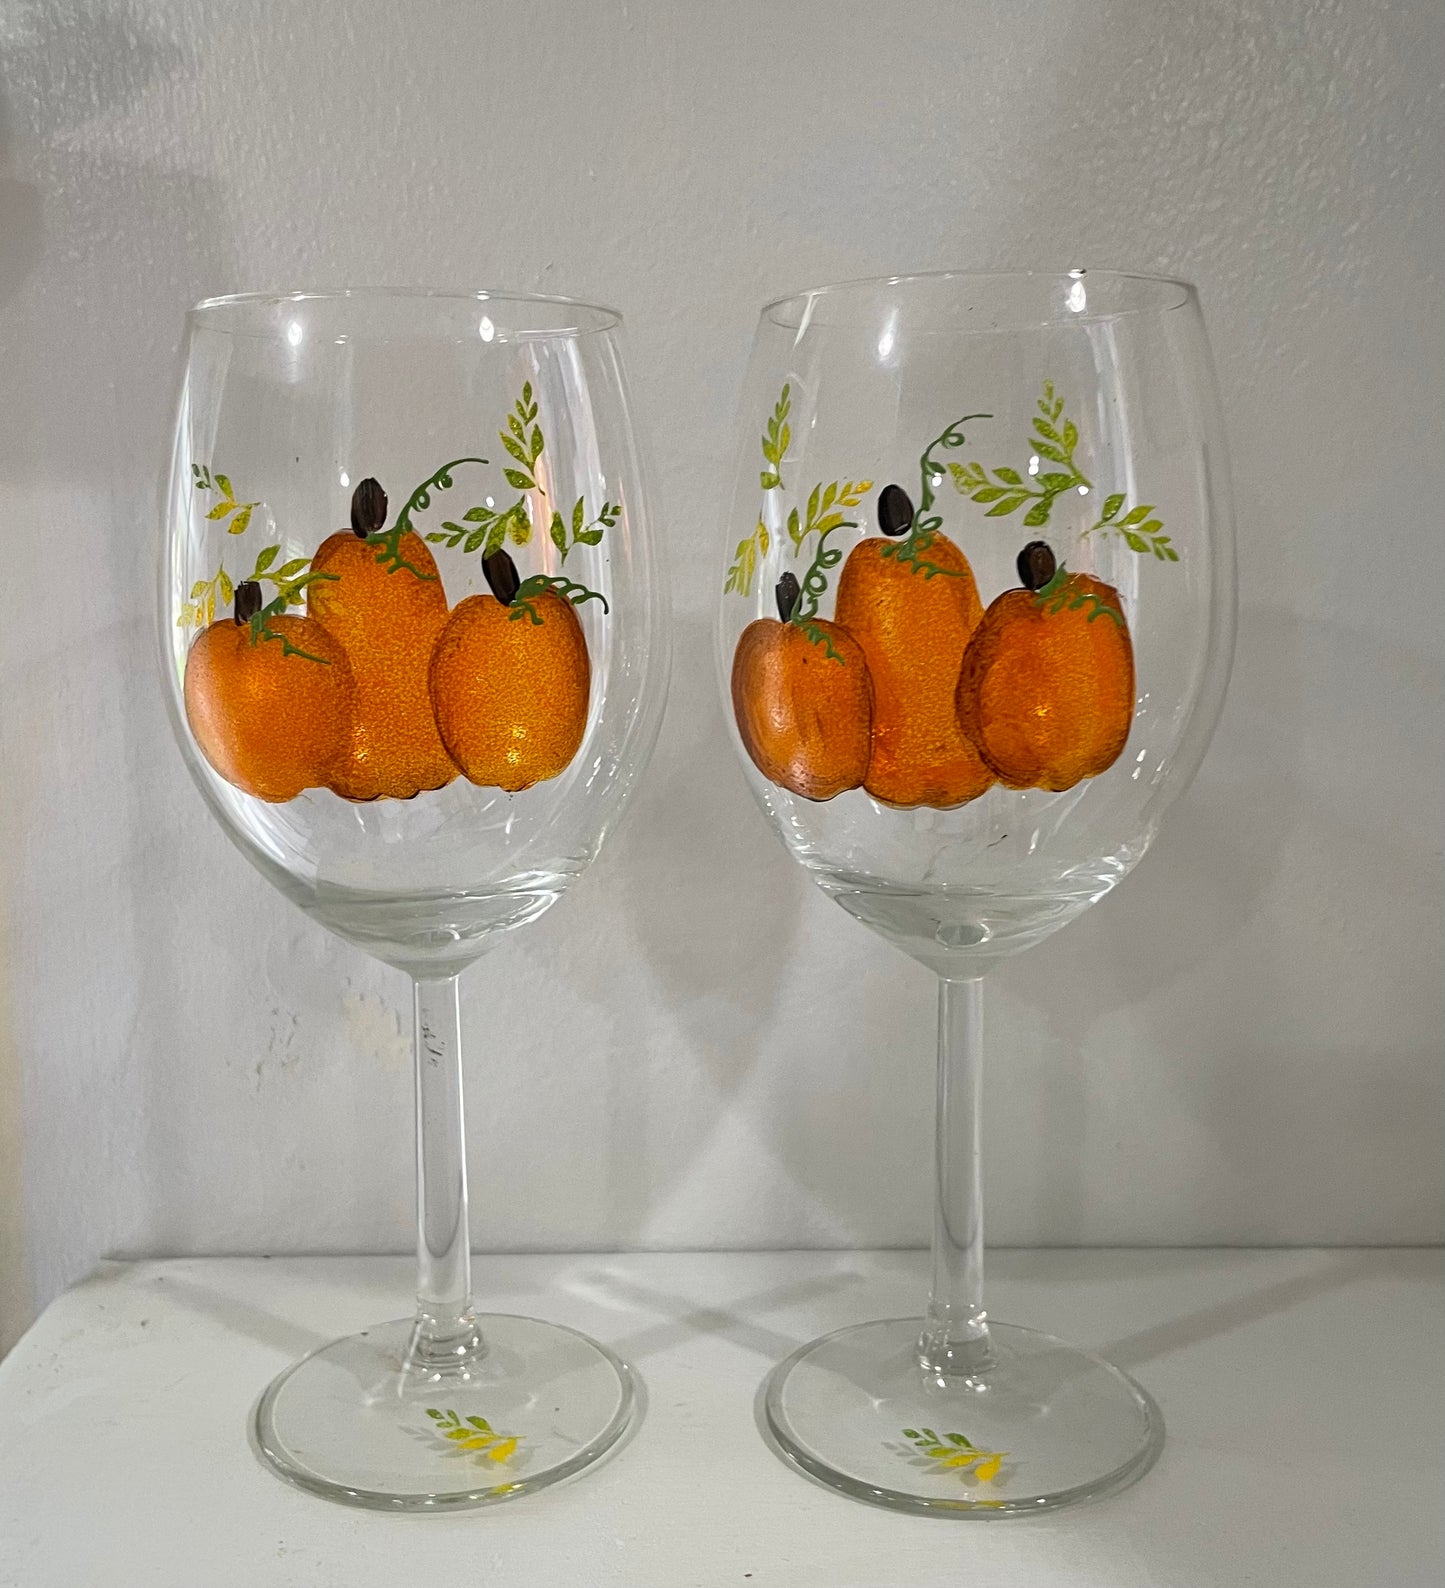 Three Pumpkin Hand Painted on a 15 oz stemmed wine